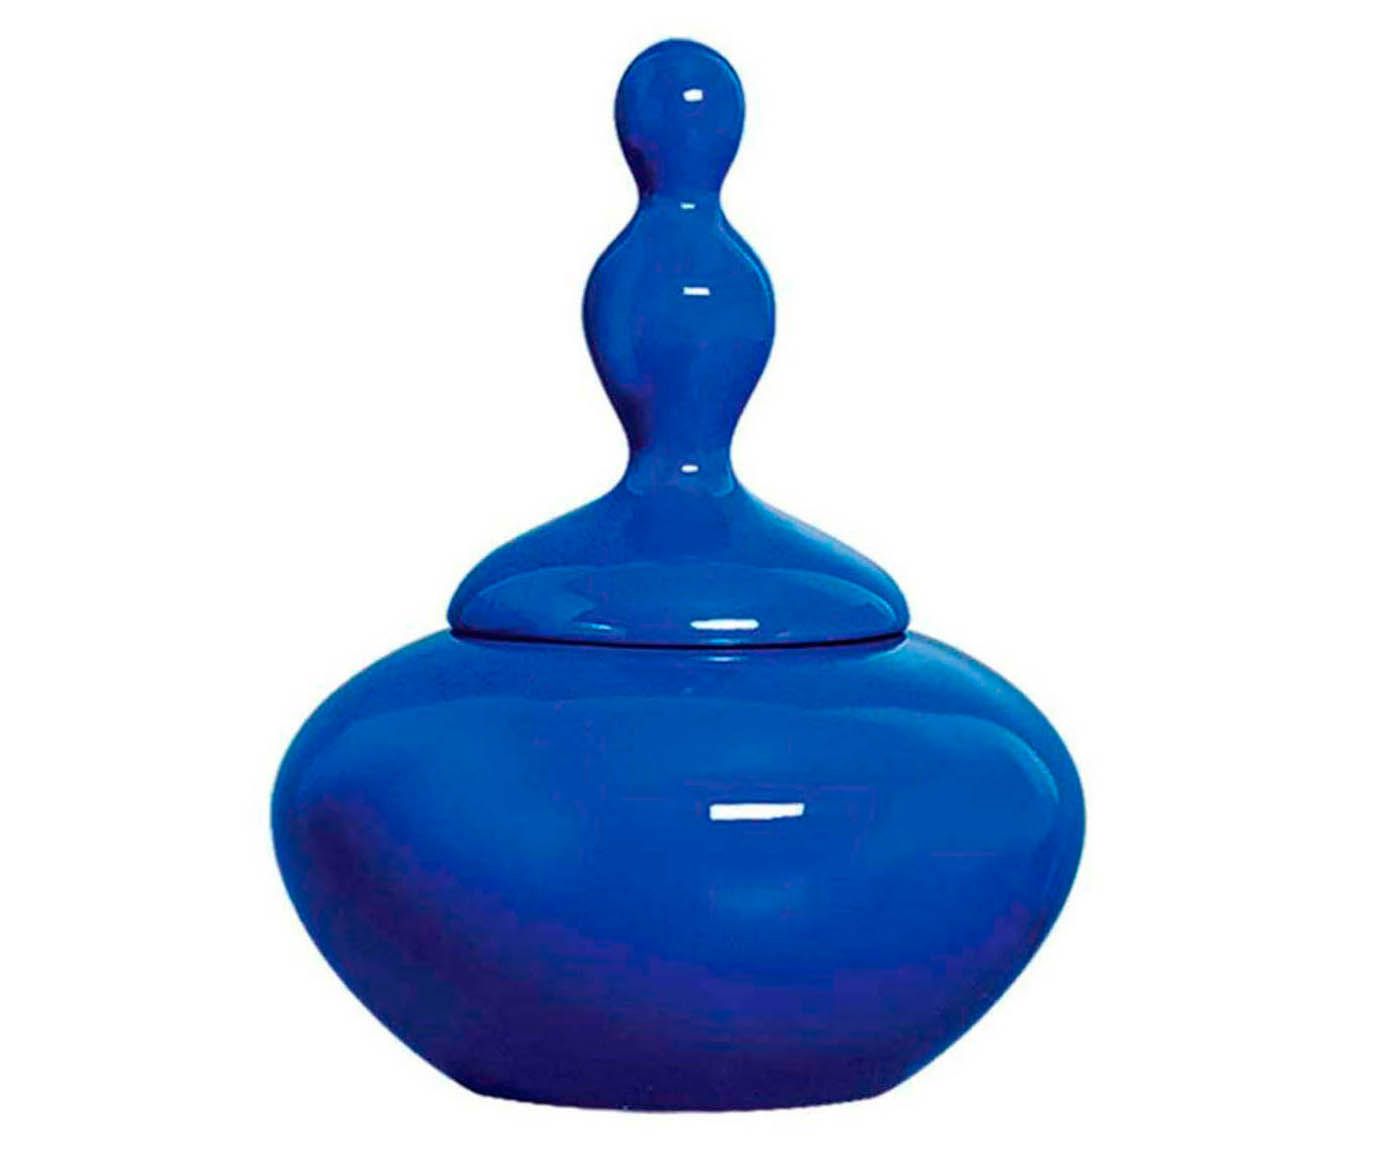 Potiche pleasure azul - 28cm | Westwing.com.br